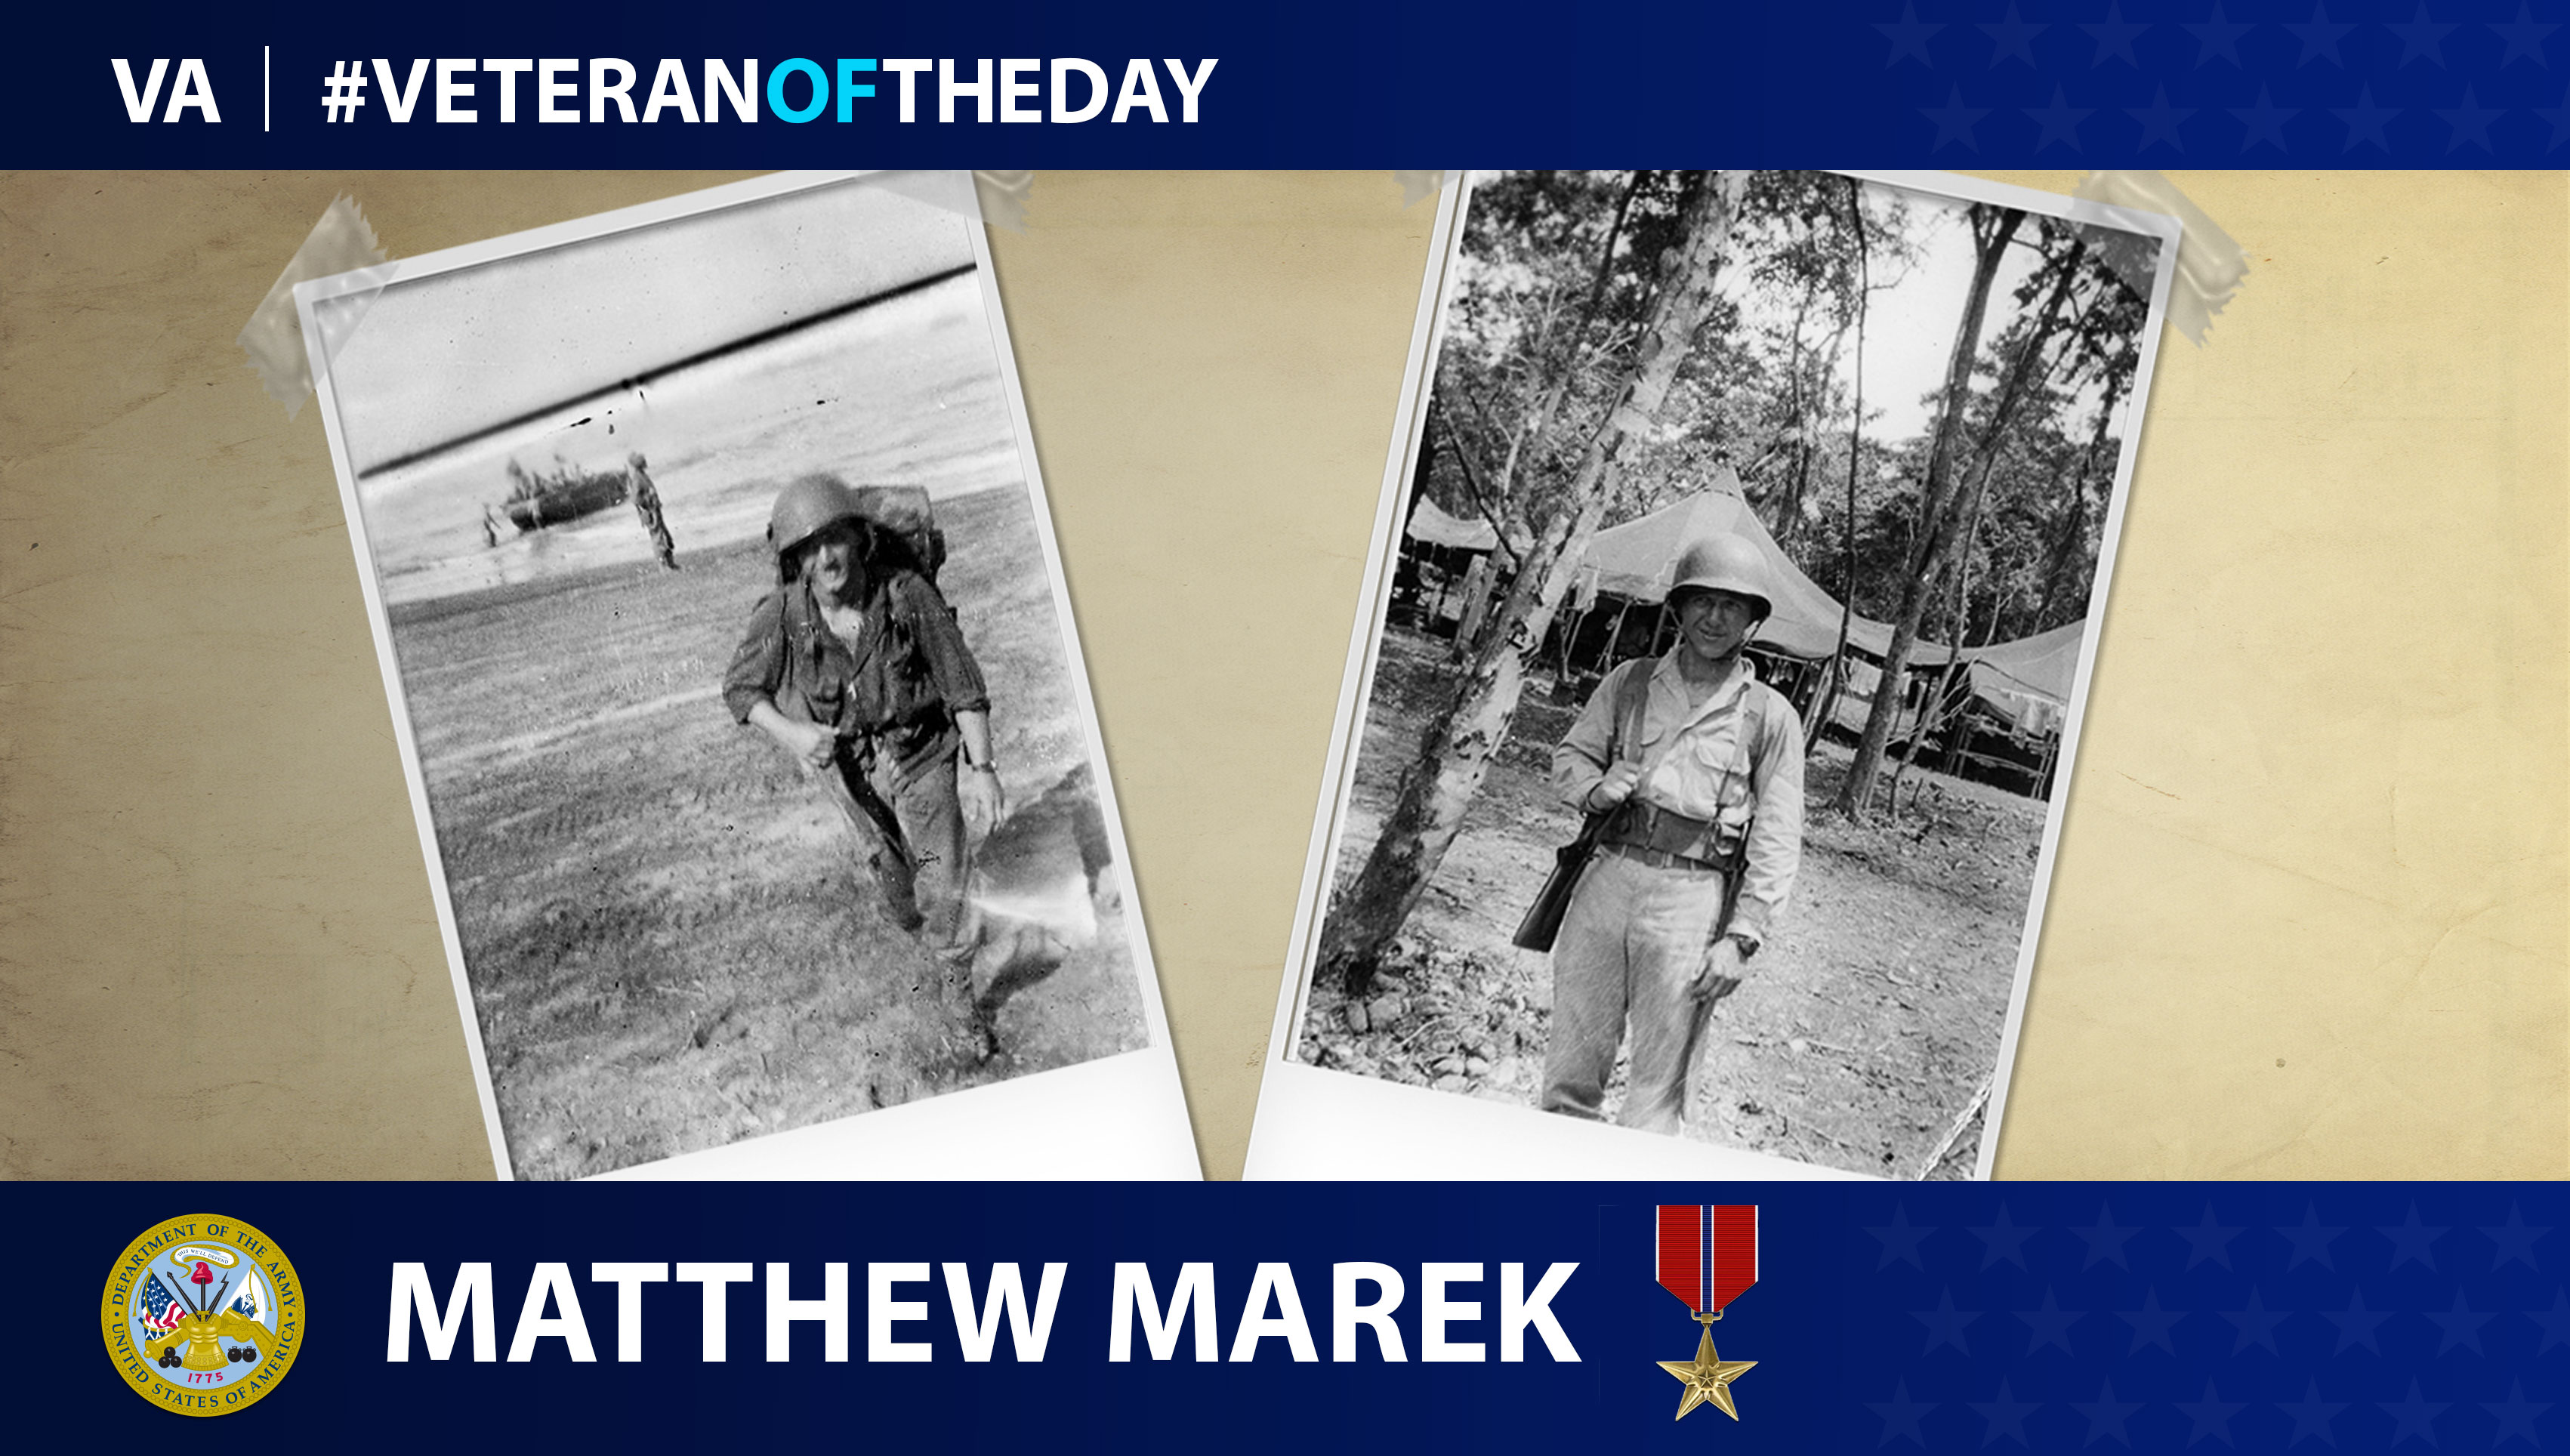 Army Veteran Matthew Marek is today's Veteran of the day.